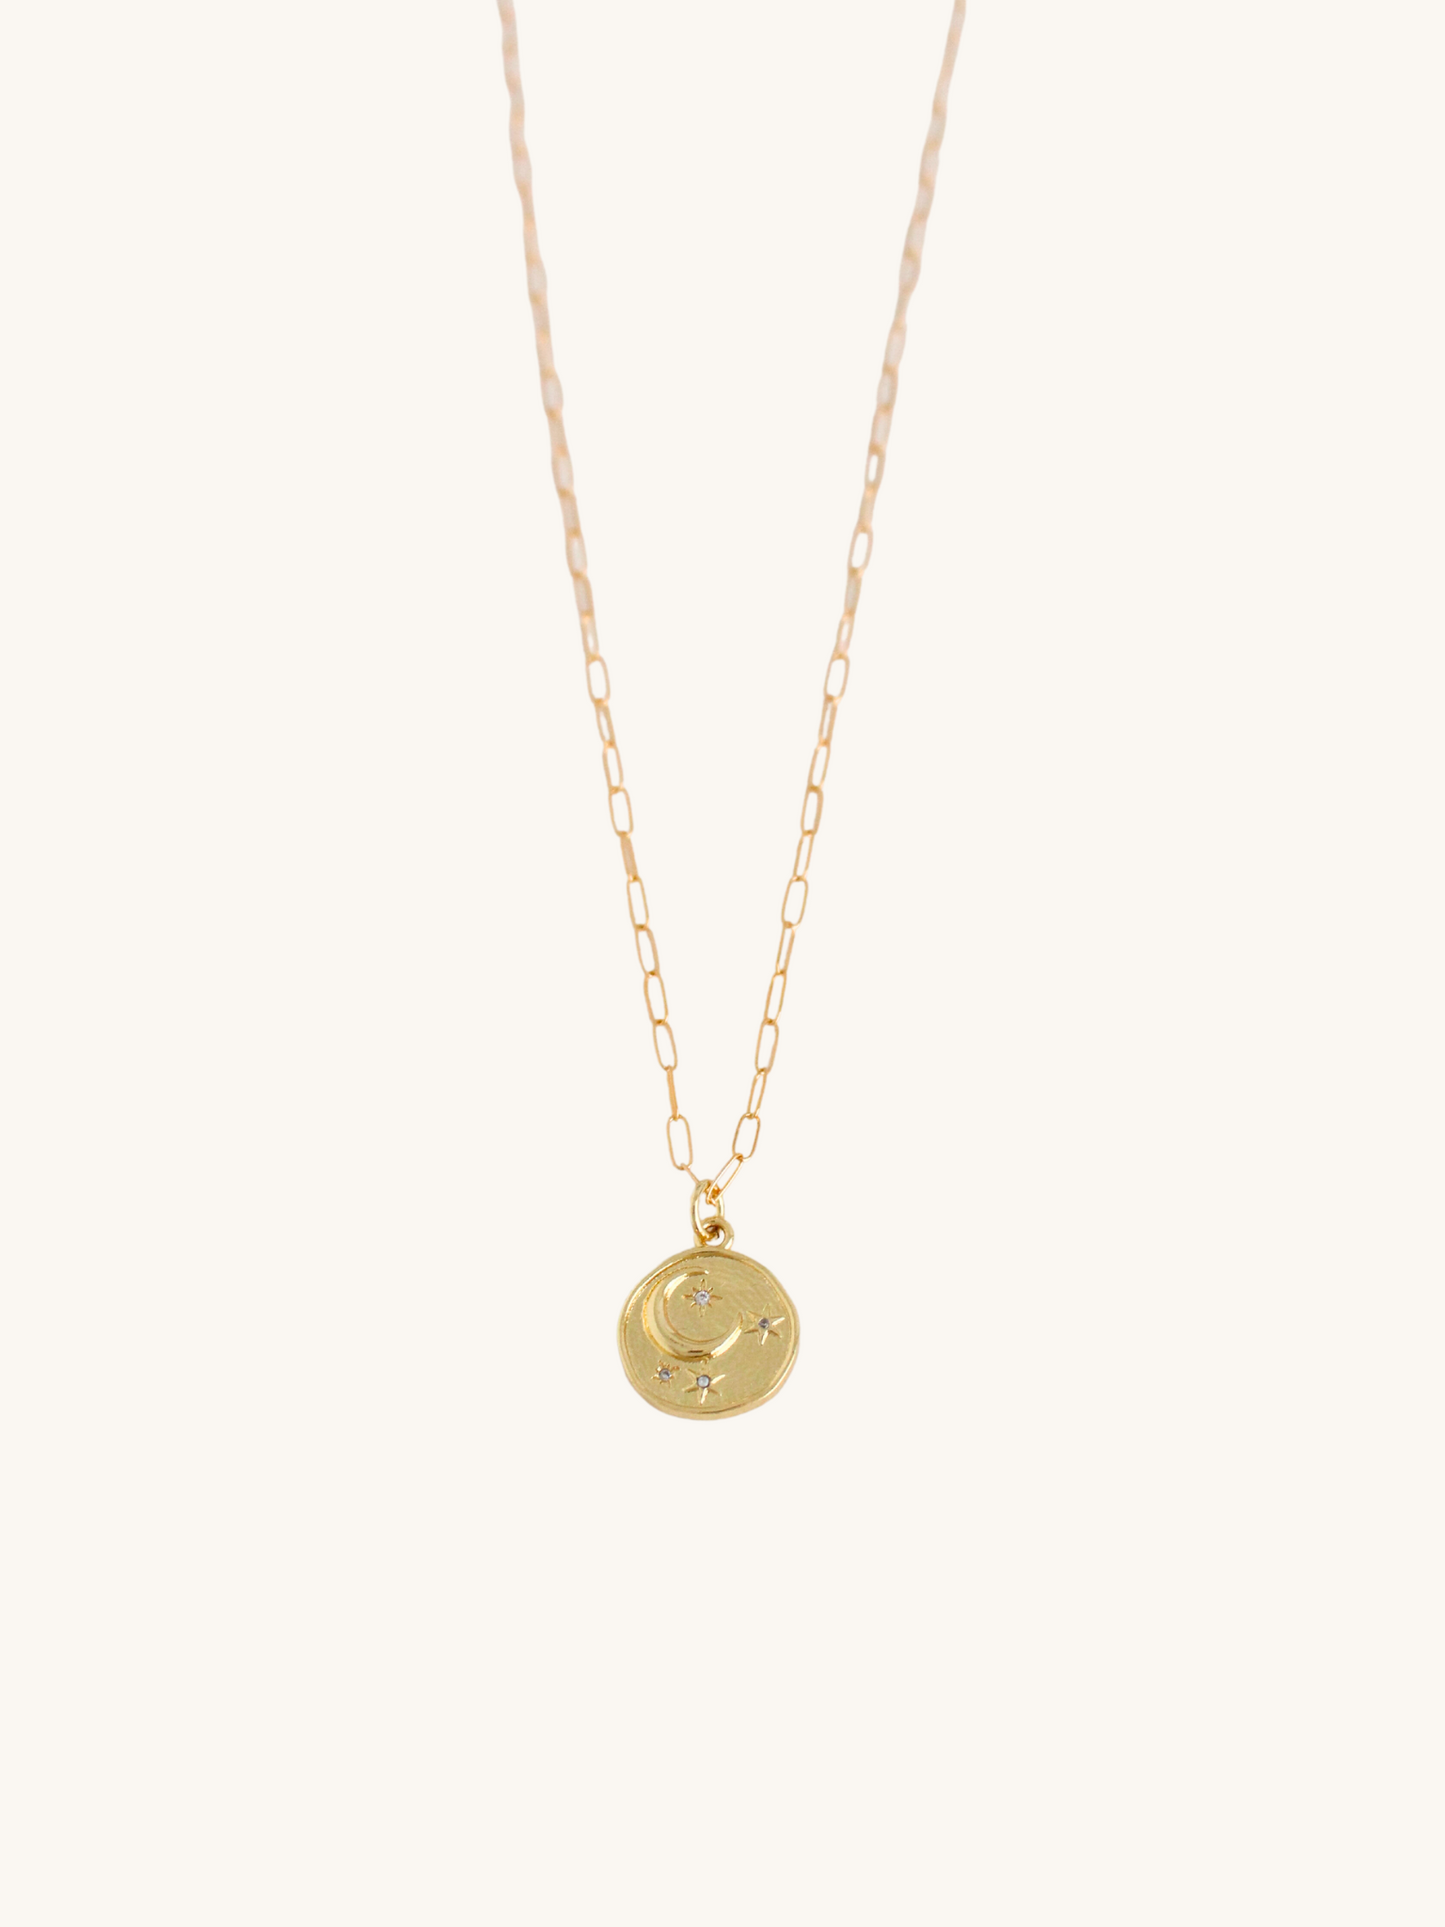 Gold celestial necklace